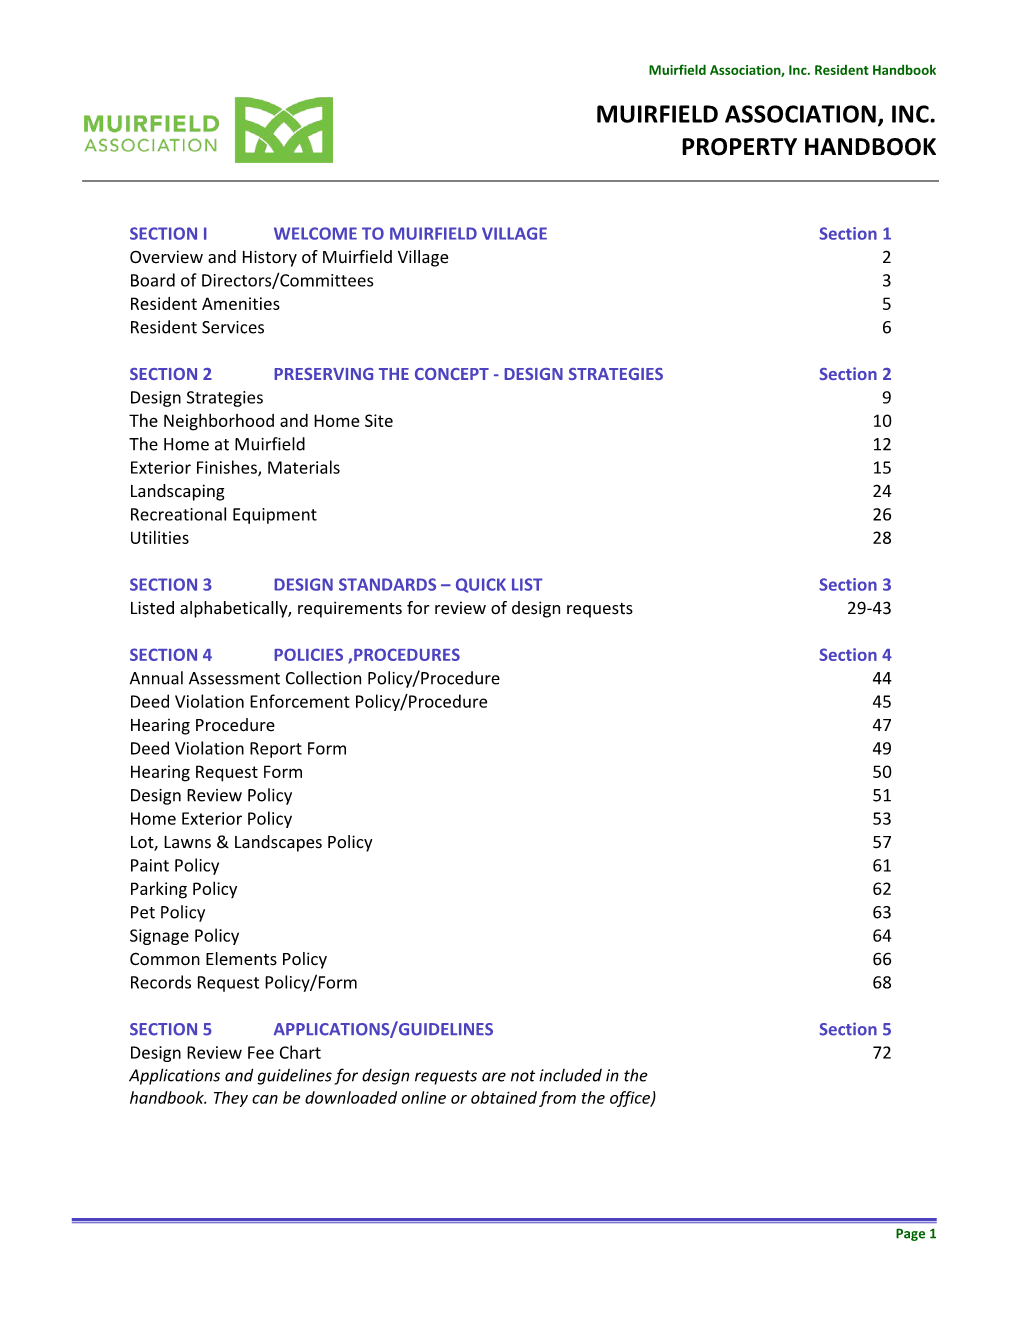 Muirfield Association, Inc. Property Handbook